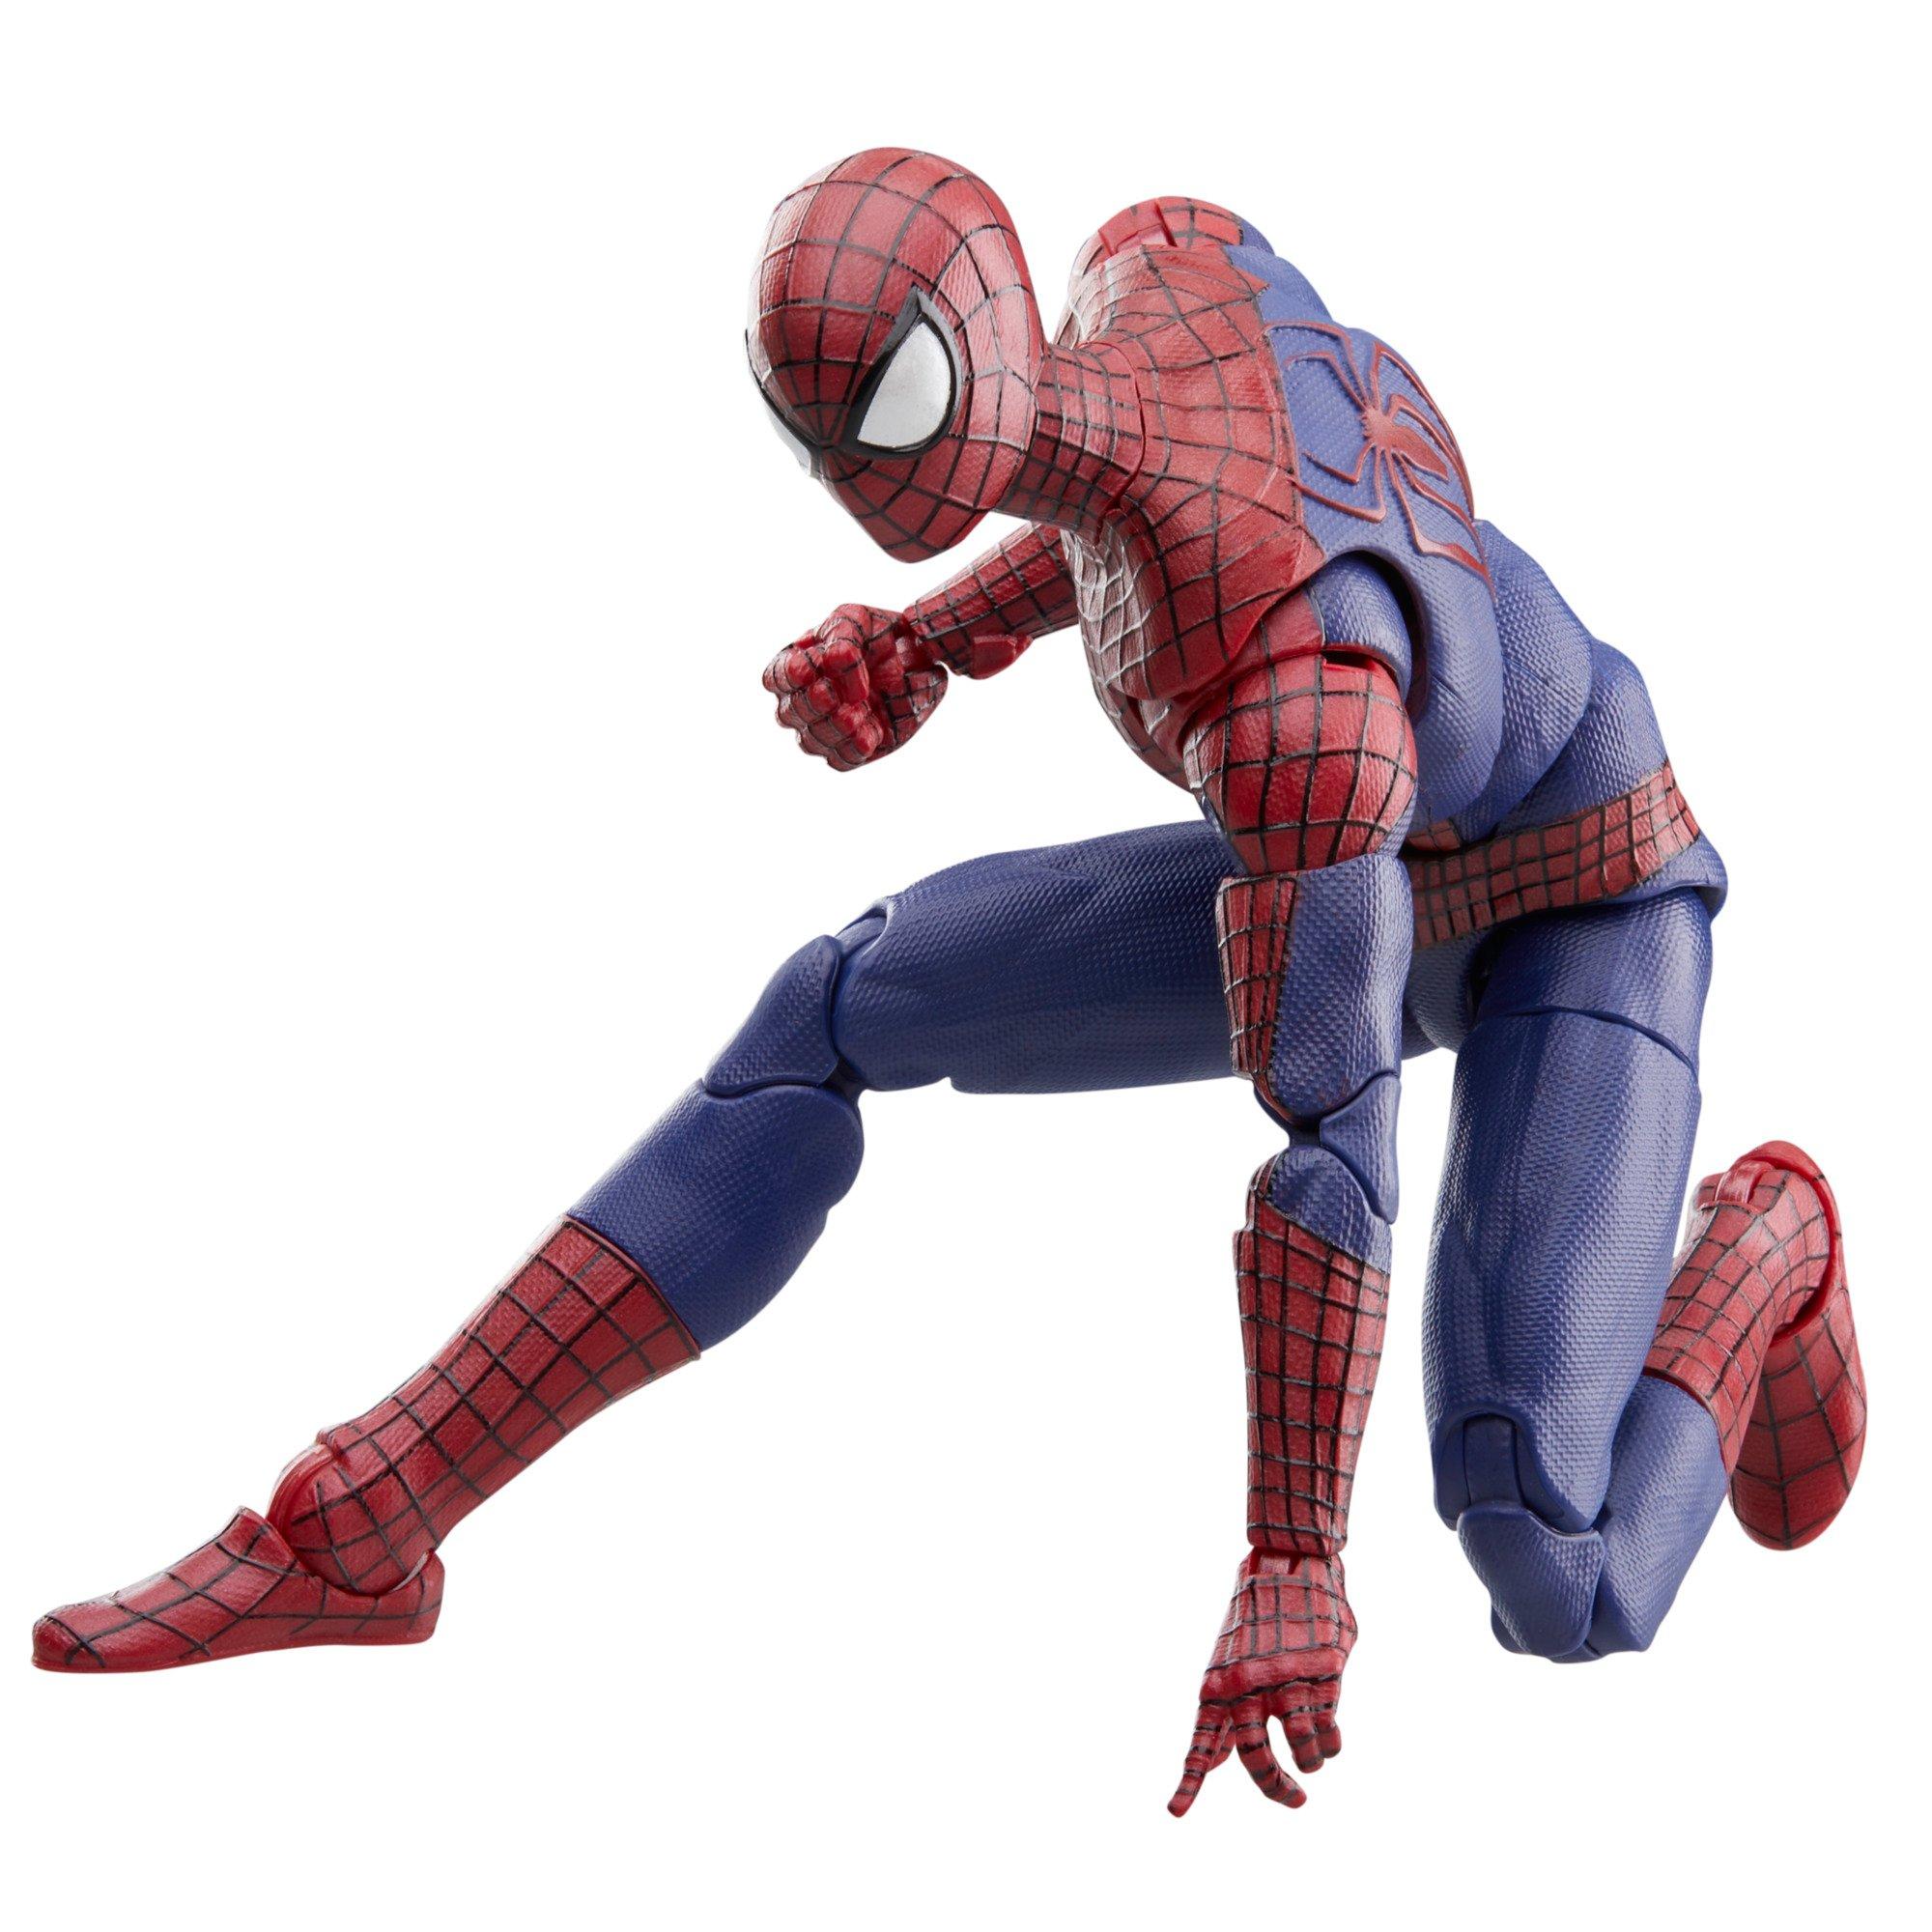 Spider-Man Gets An Exclusive Amazing Fantasy Retro Marvel Legends